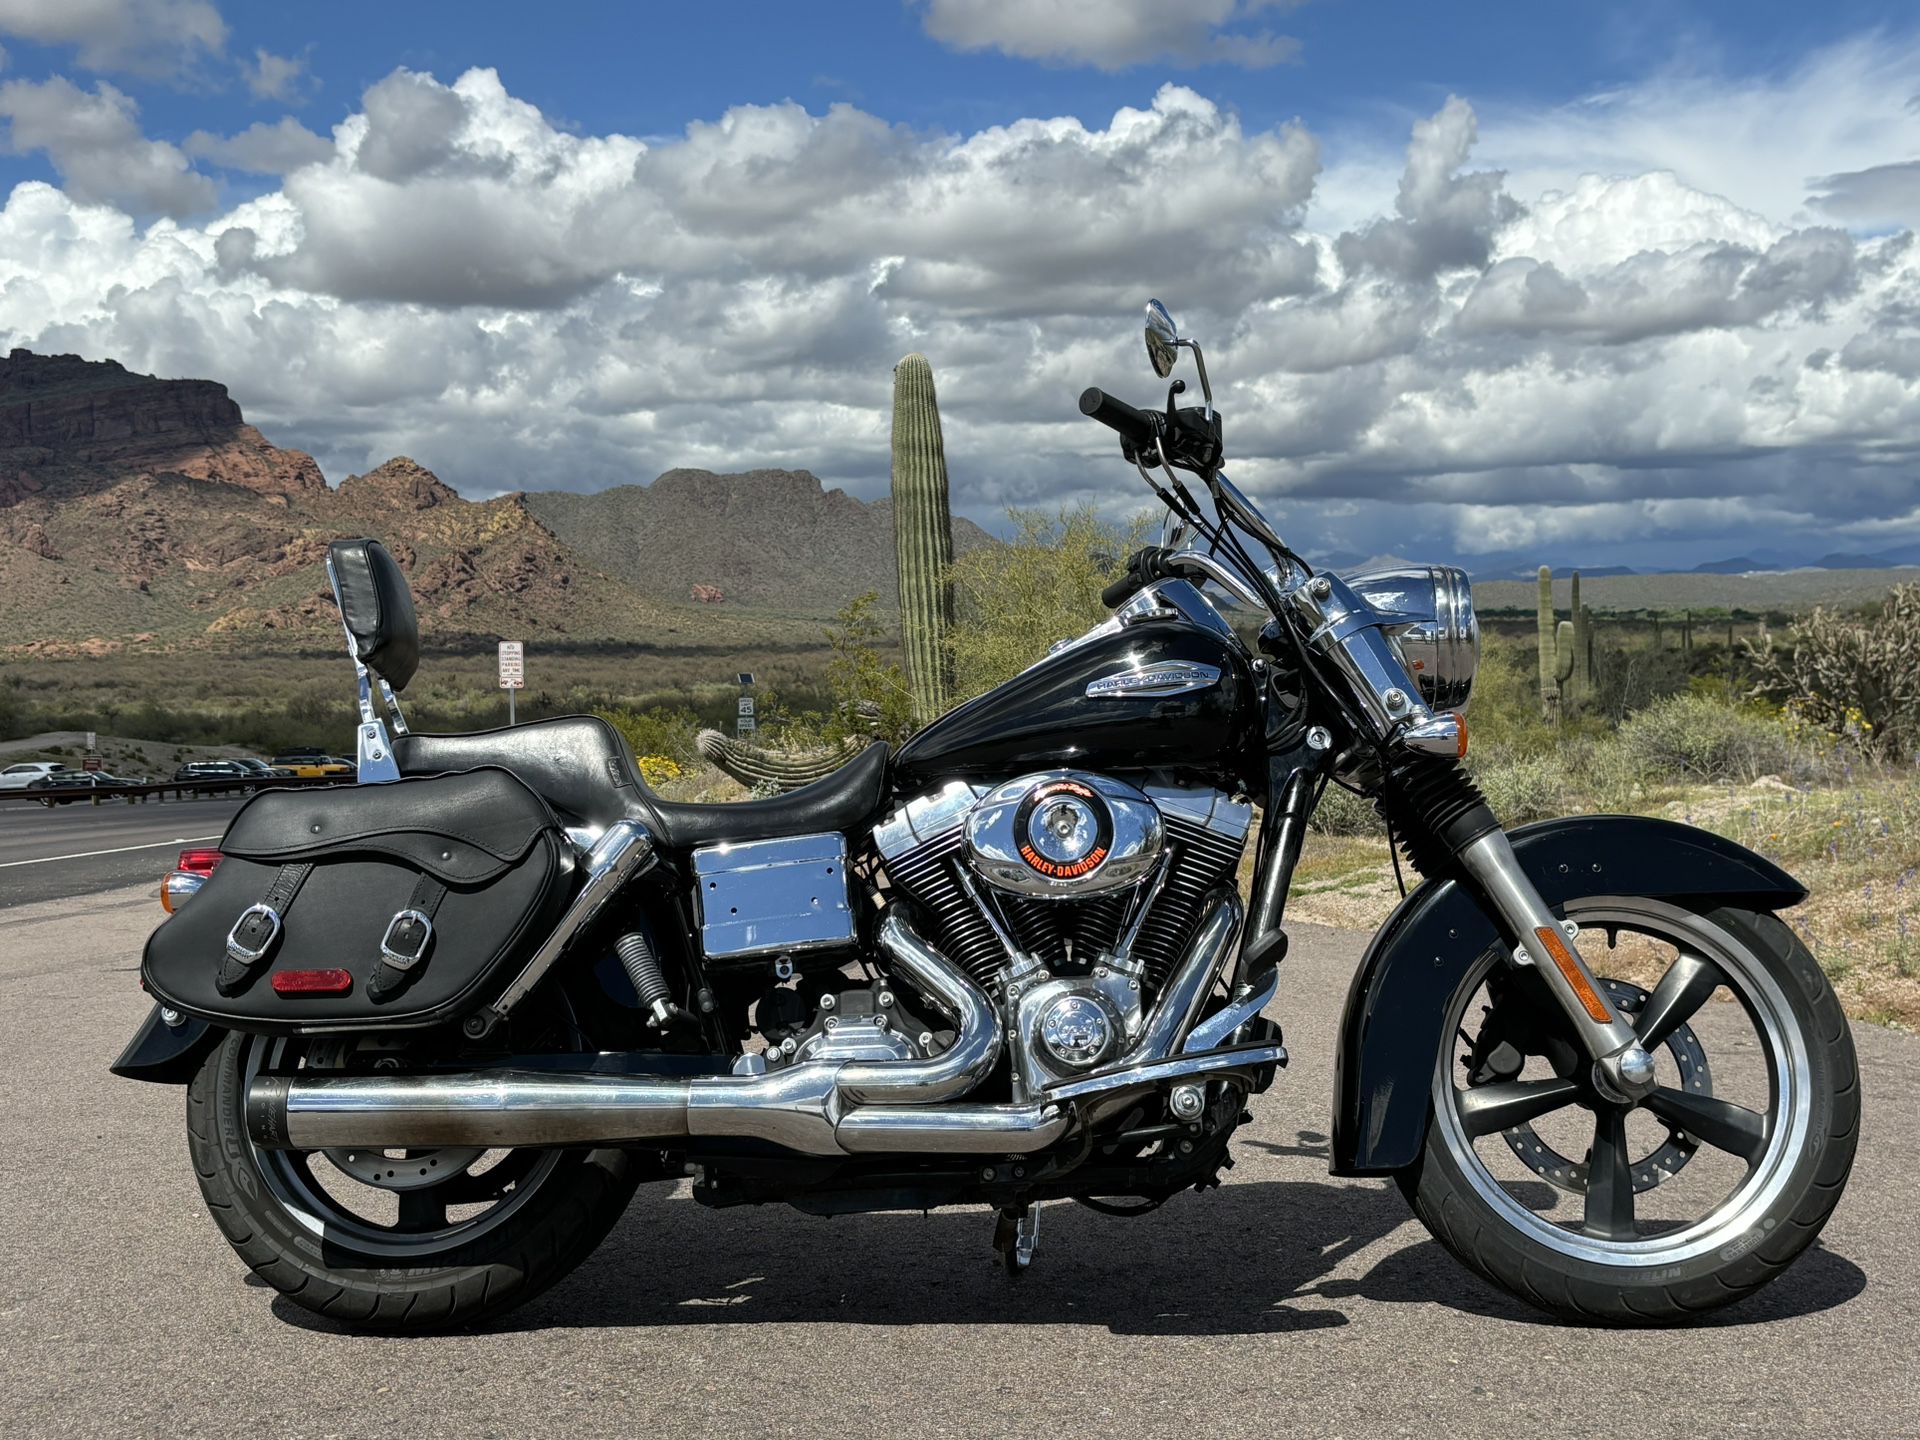 2013 Harley Davidson Dyna switchback FLD 103